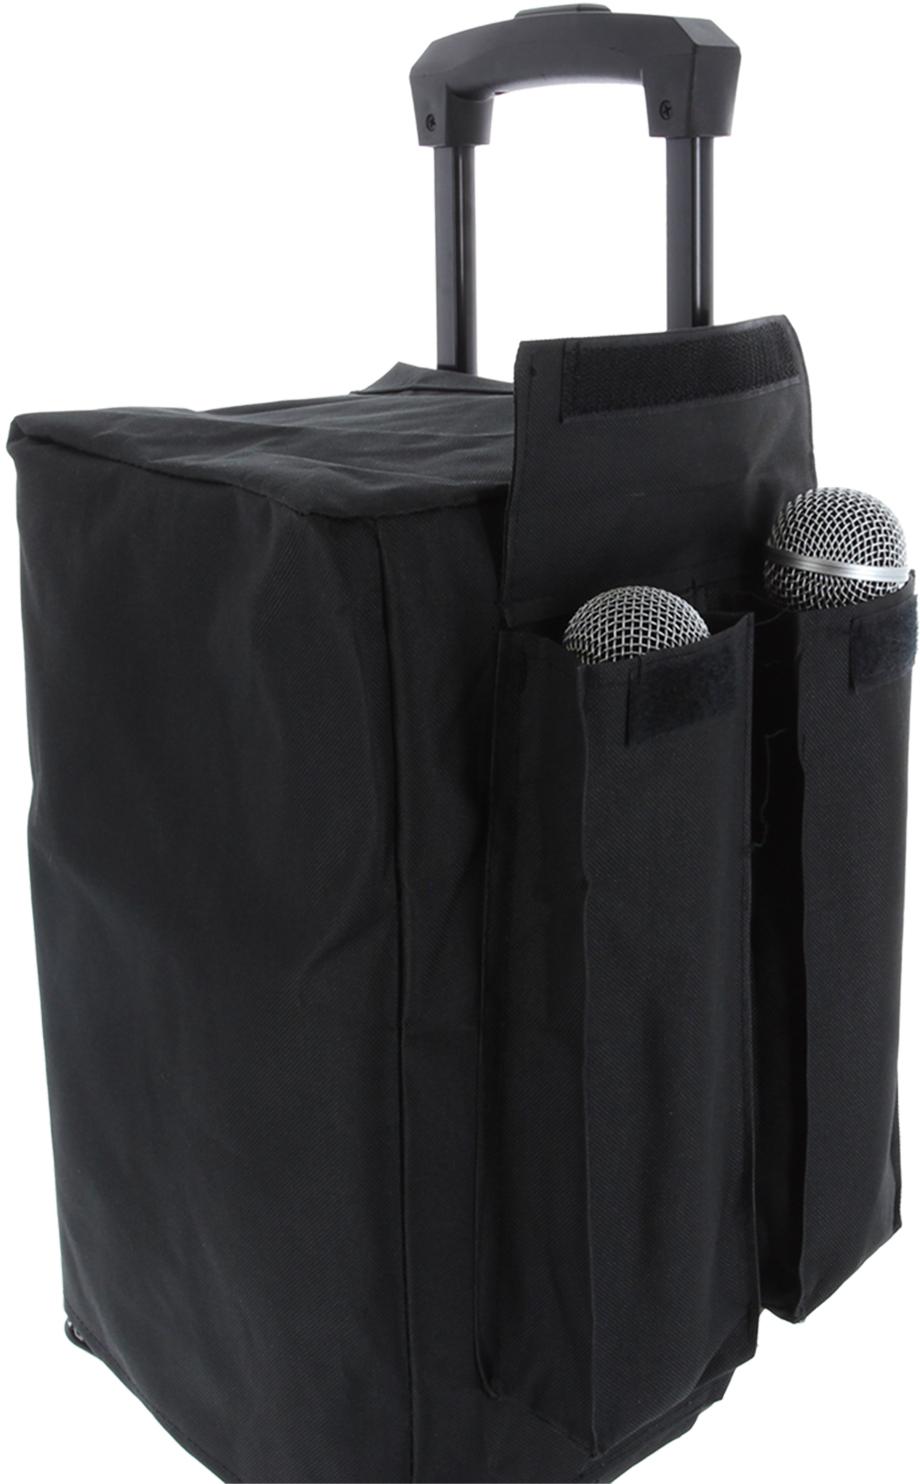 Power Acoustics Bag Taky 8 - Bag for speakers & subwoofer - Variation 3